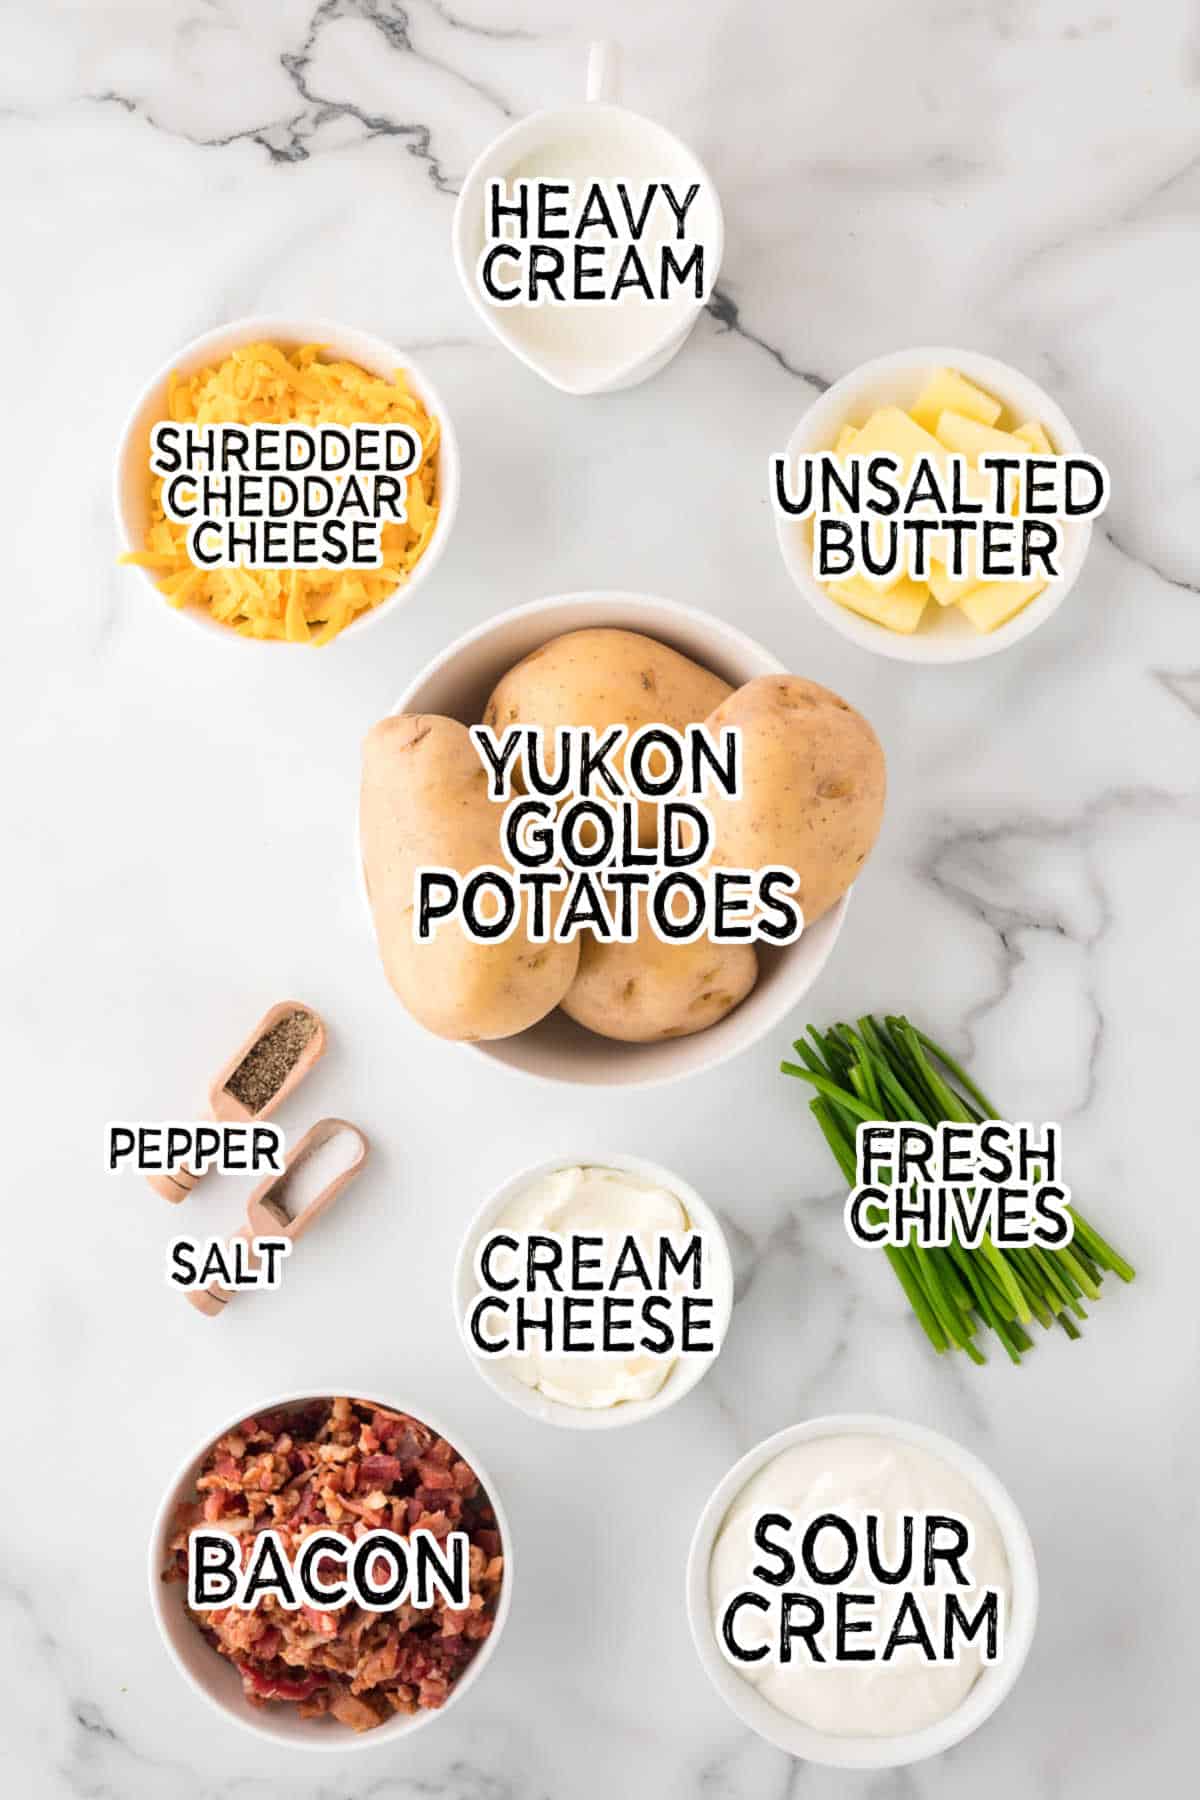 Ingredients to make twice baked potato casserole.